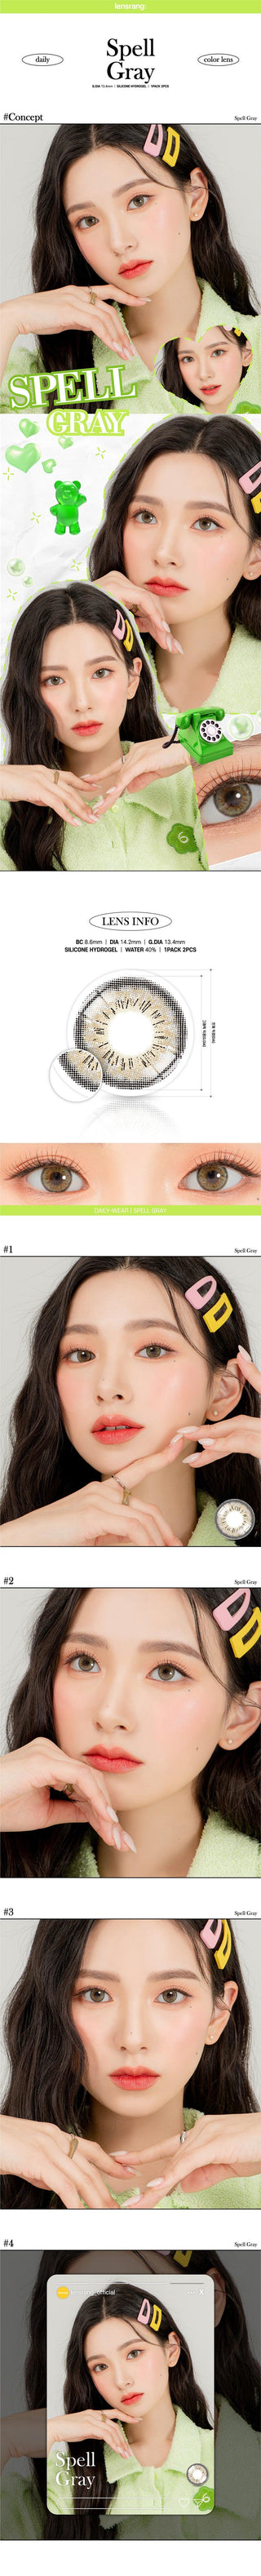 Lensrang Spell Green Color Contact Lens - EyeCandys